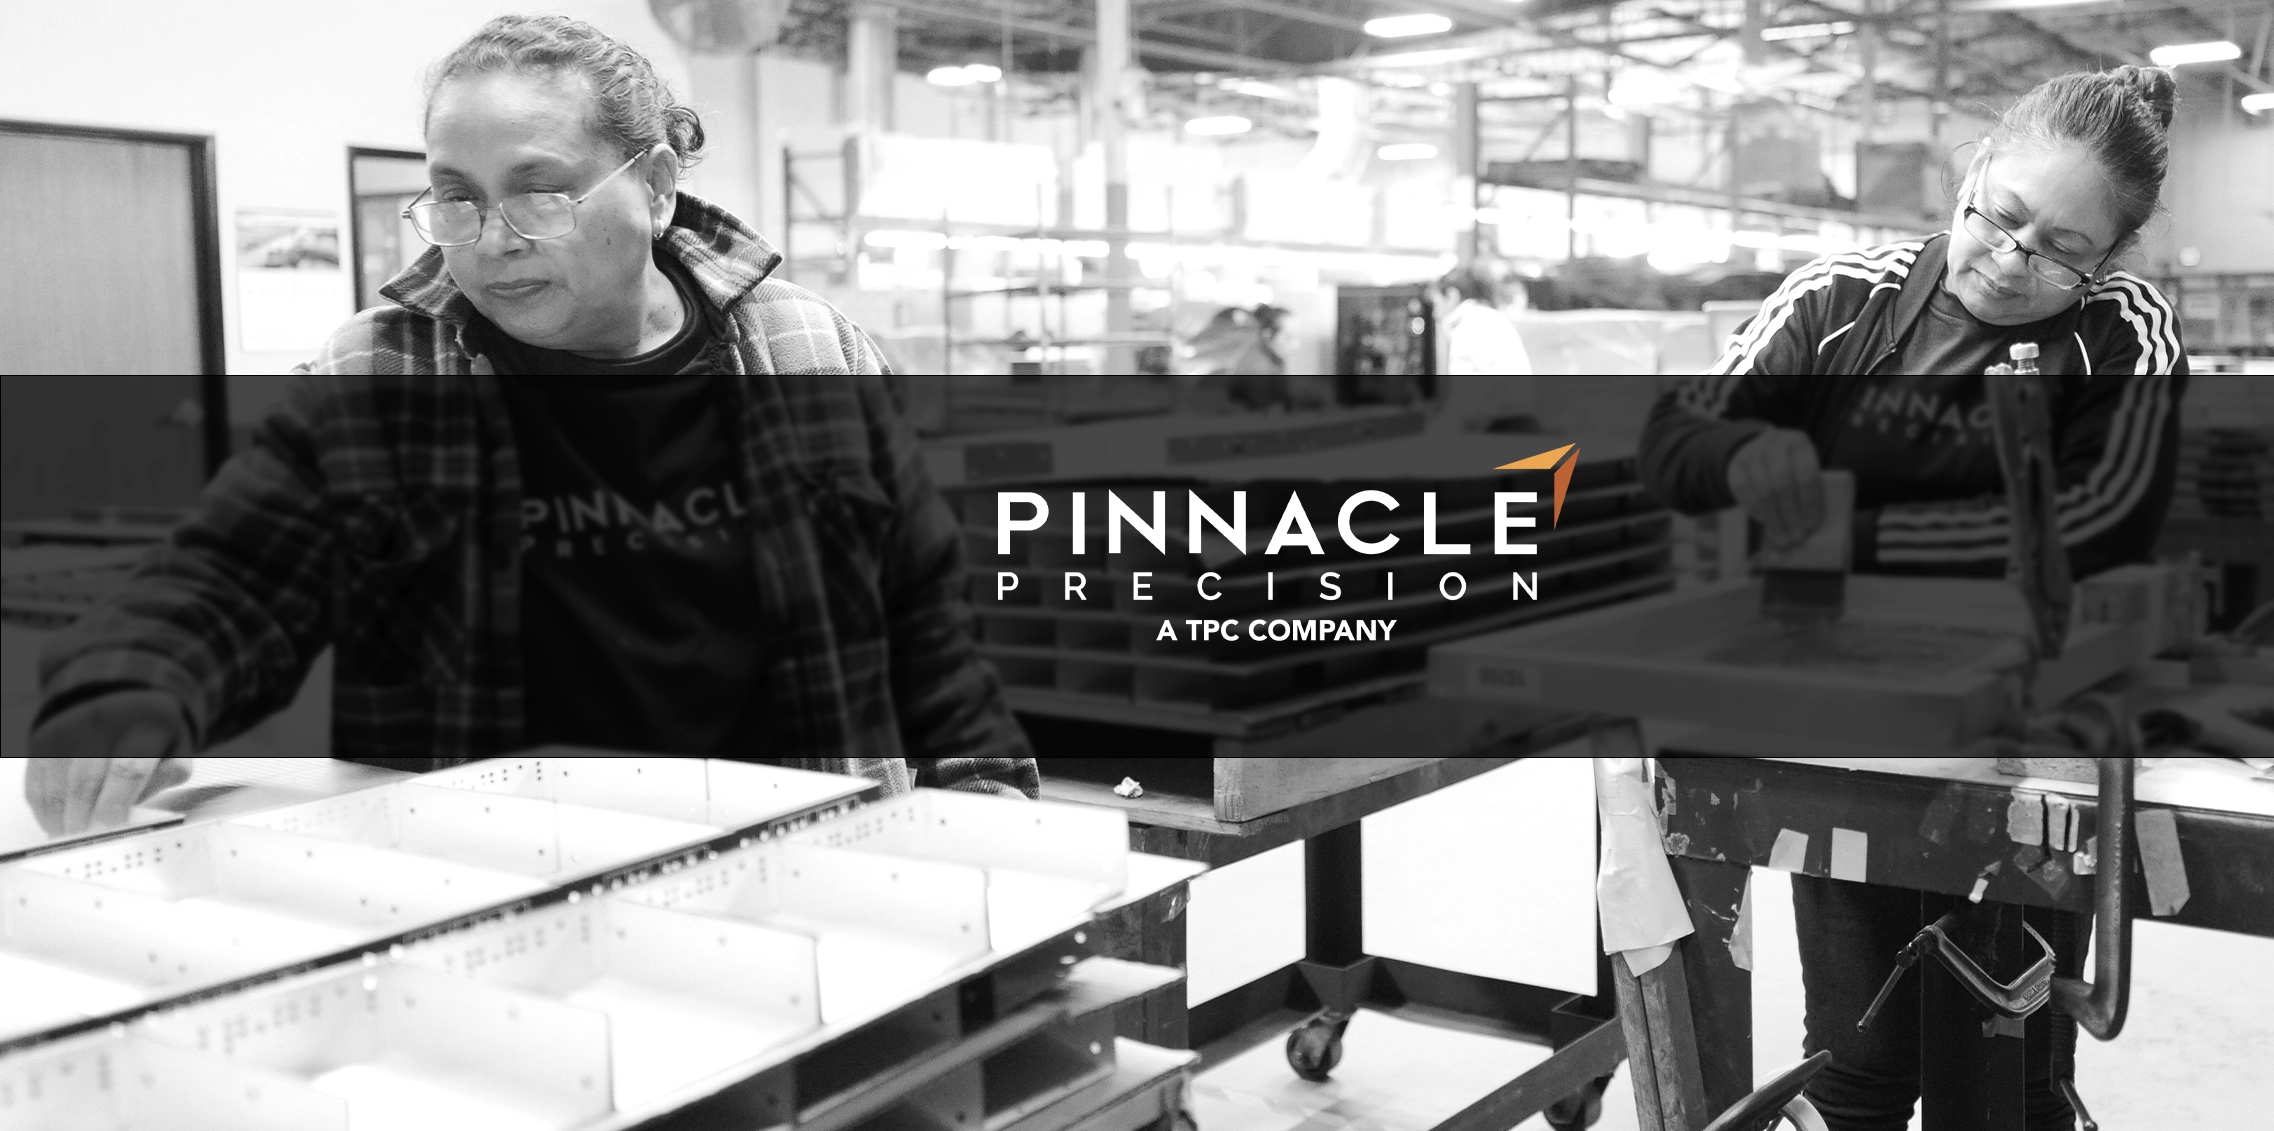 Pinnacle Precision tpc company